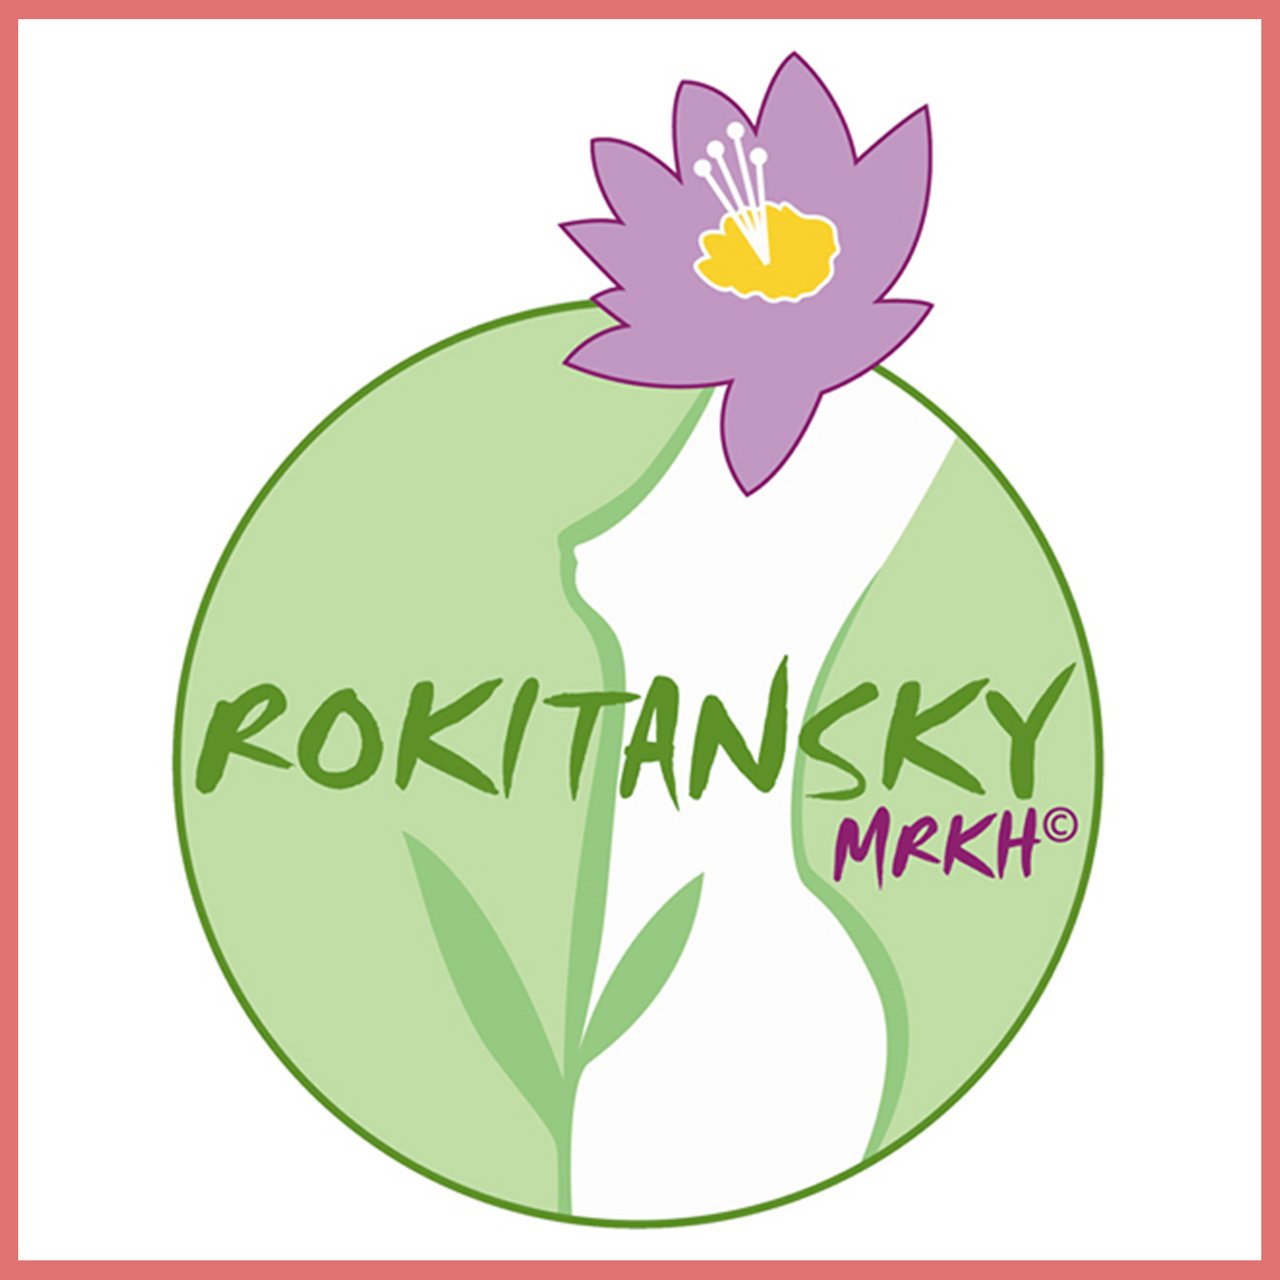 Association MRKH, Syndrome de Mayer-Rokitansky-Hauser